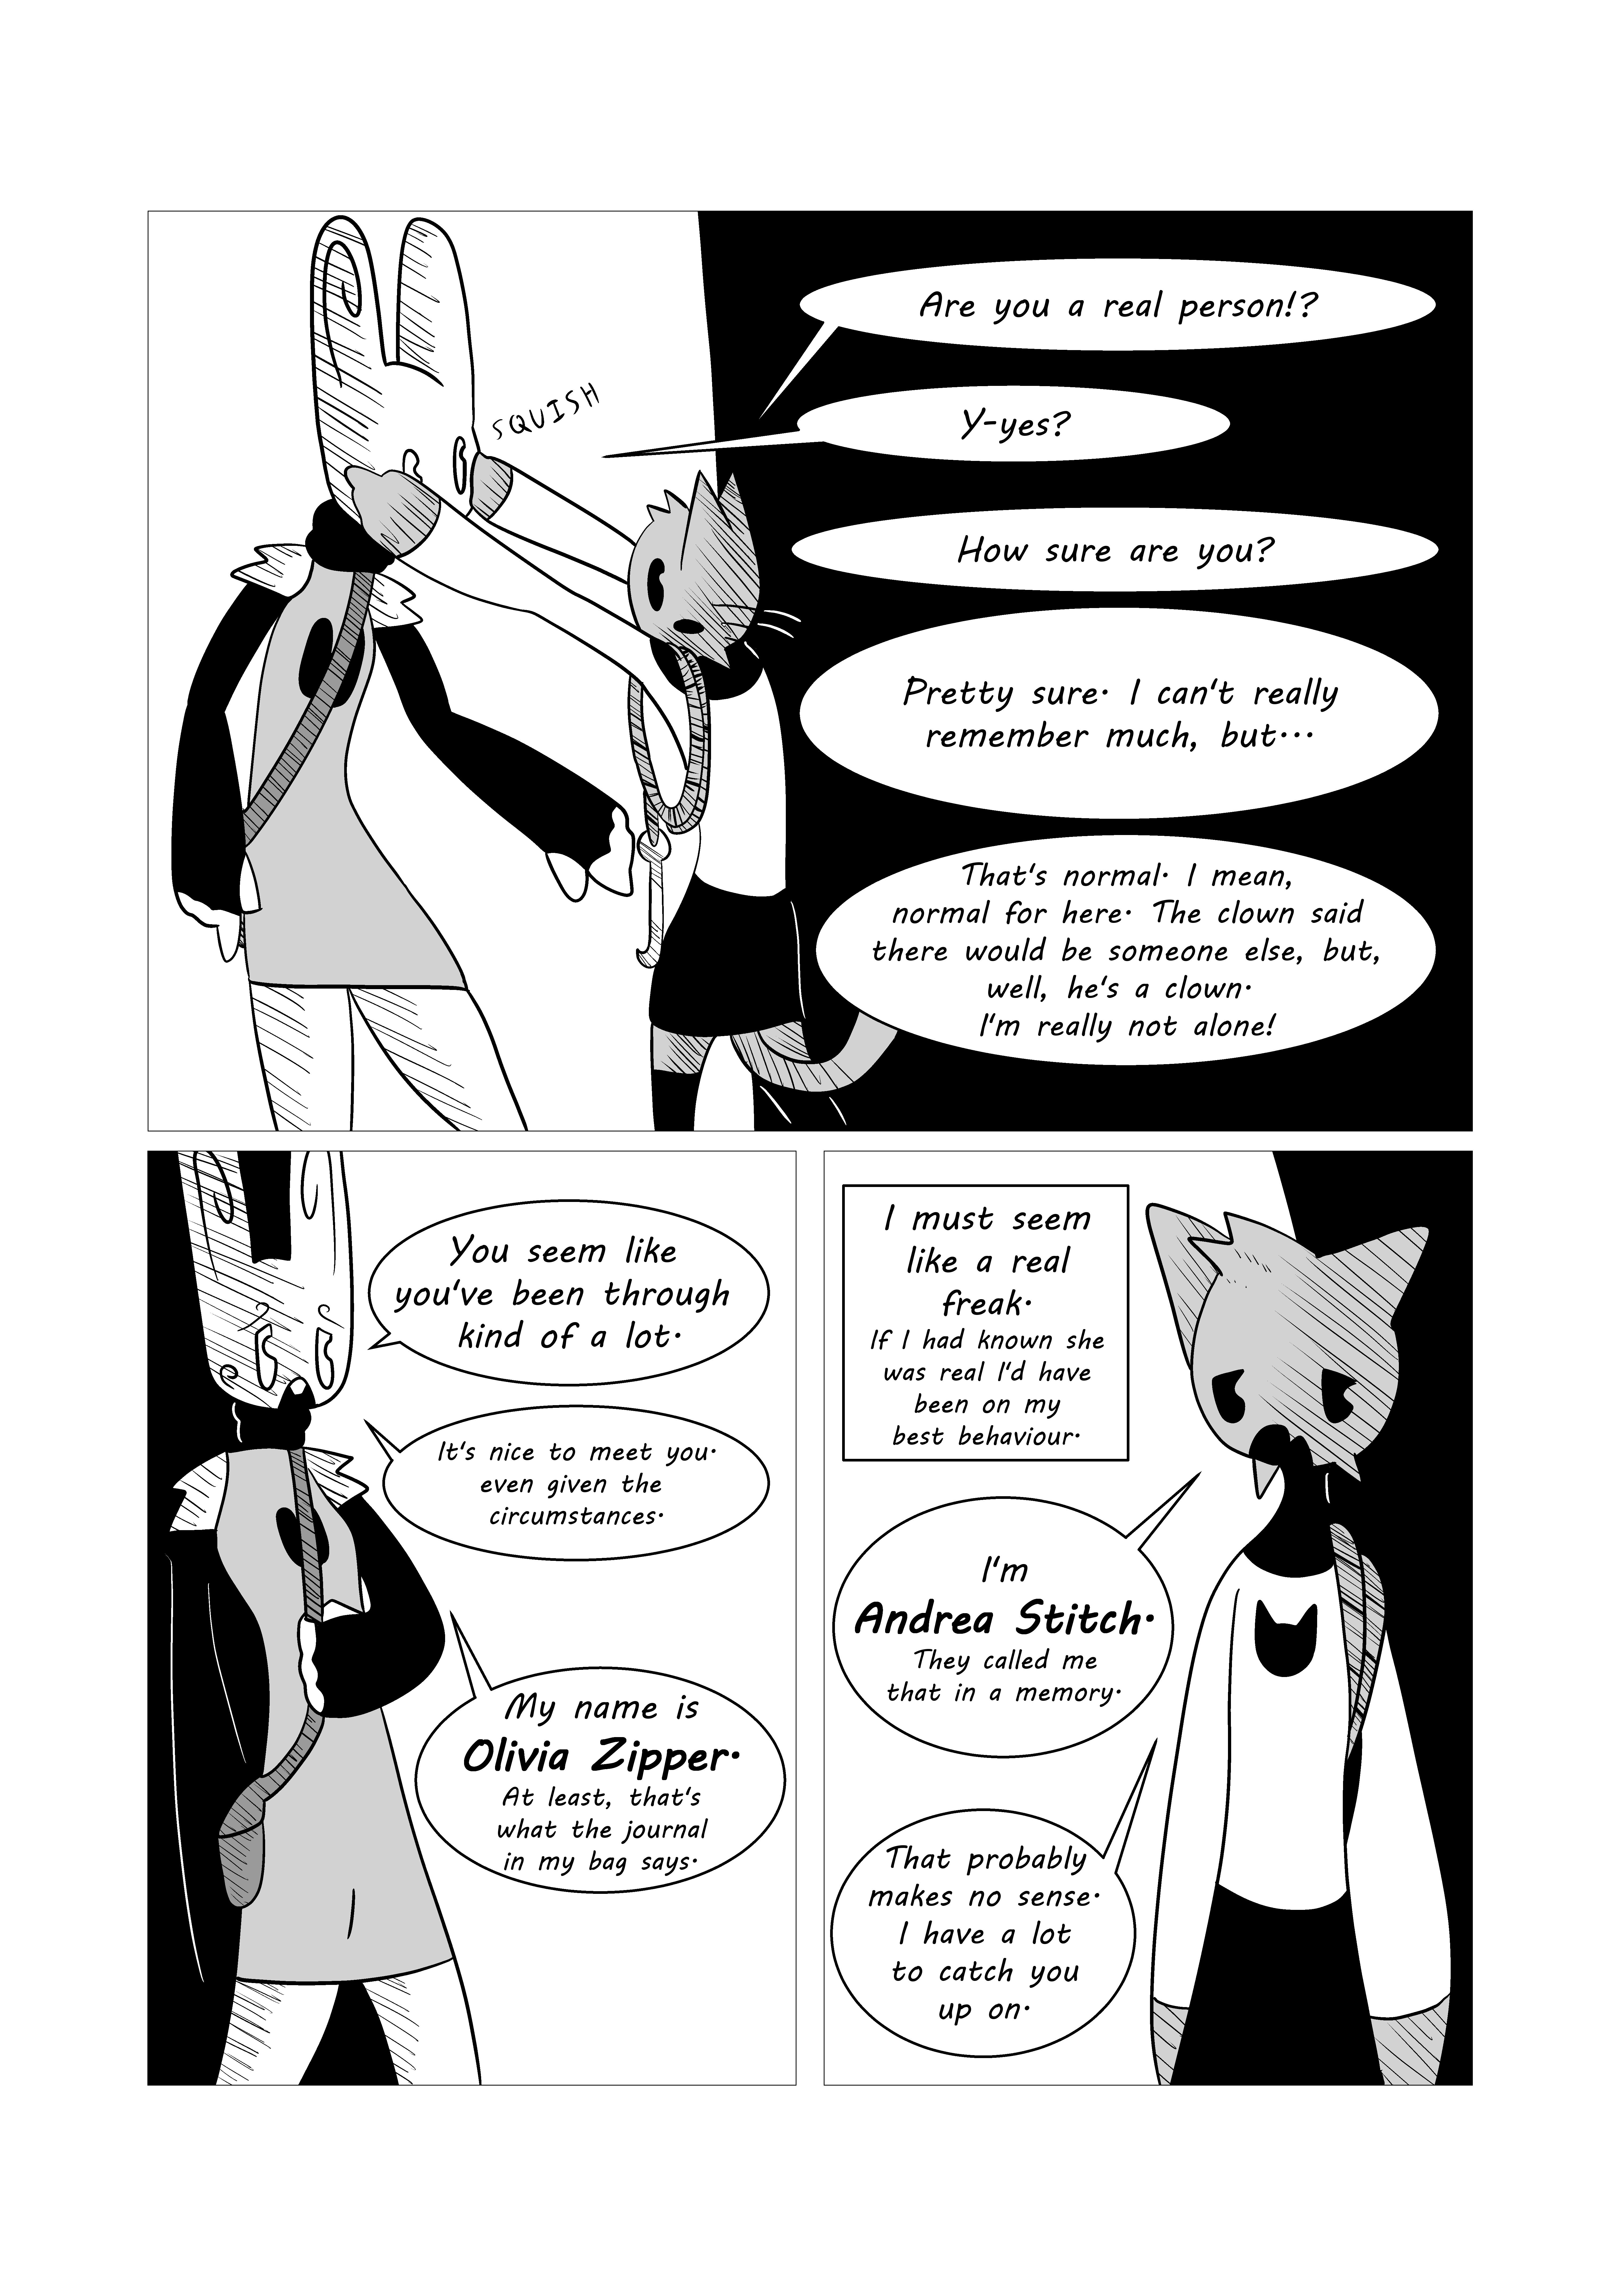 Page 58 : Olivia Zipper